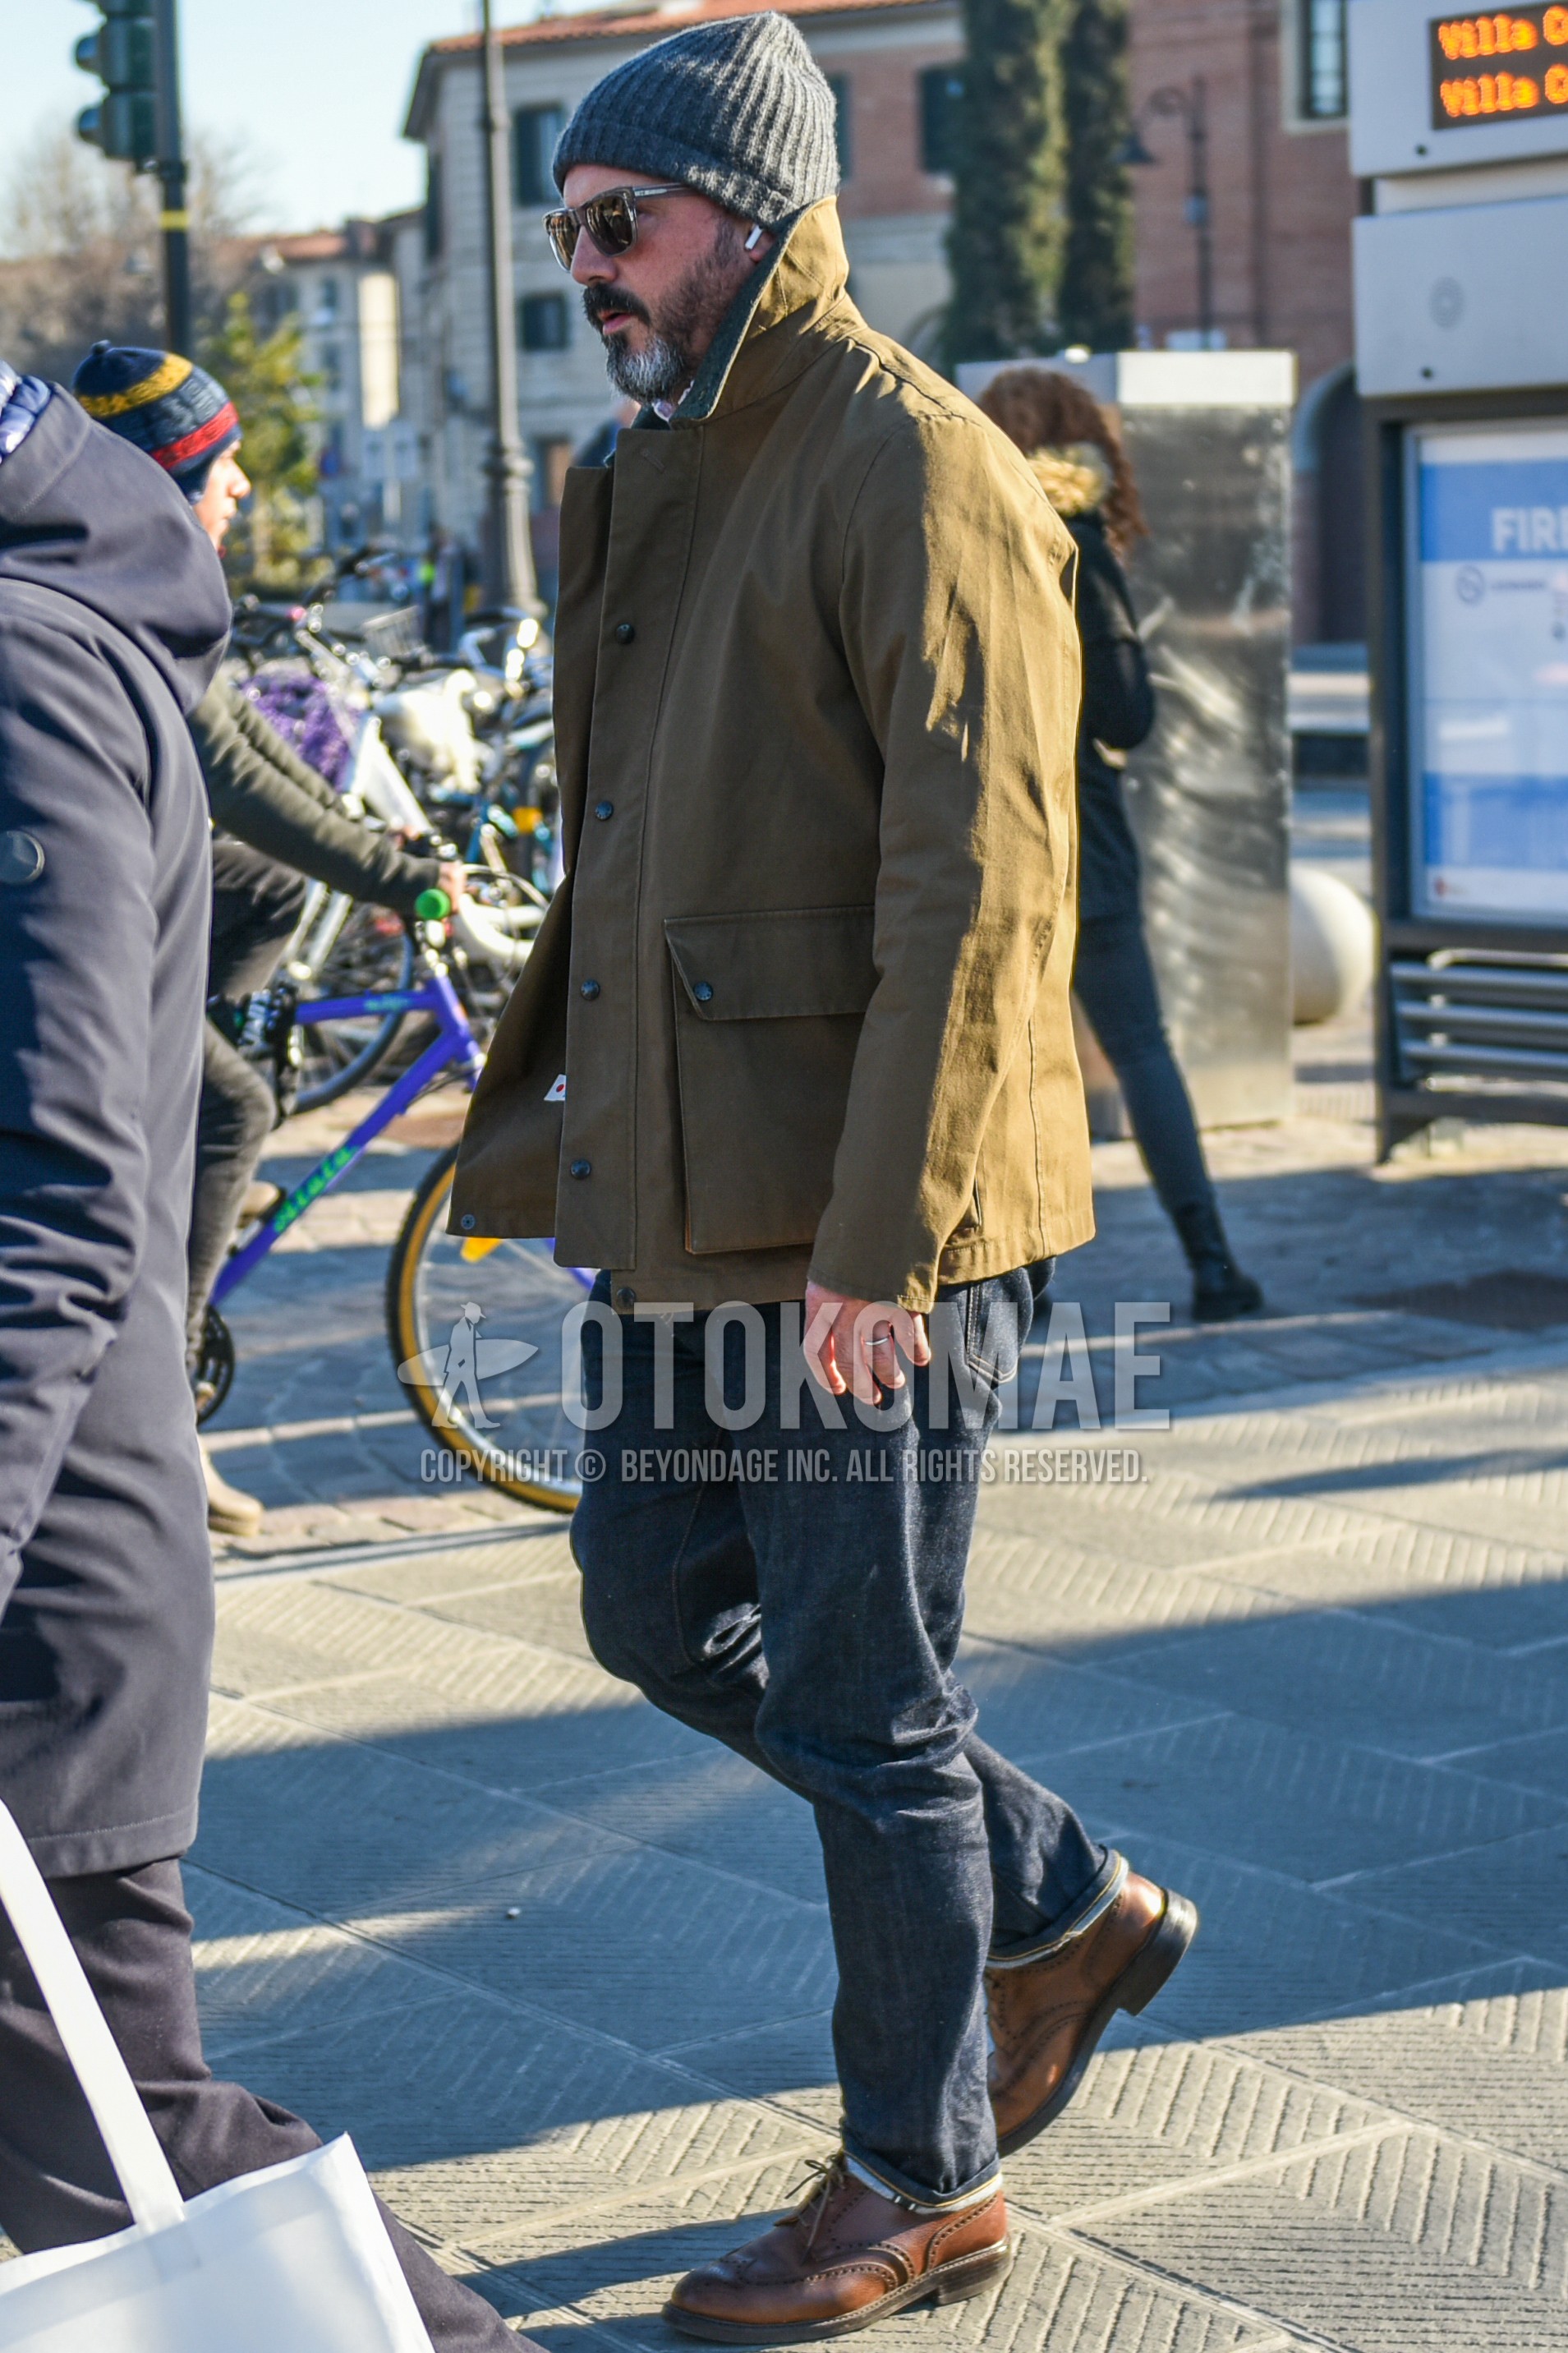 Men's autumn winter outfit with gray plain knit cap, gray plain sunglasses, beige plain coverall, navy plain denim/jeans, brown wing-tip shoes leather shoes.